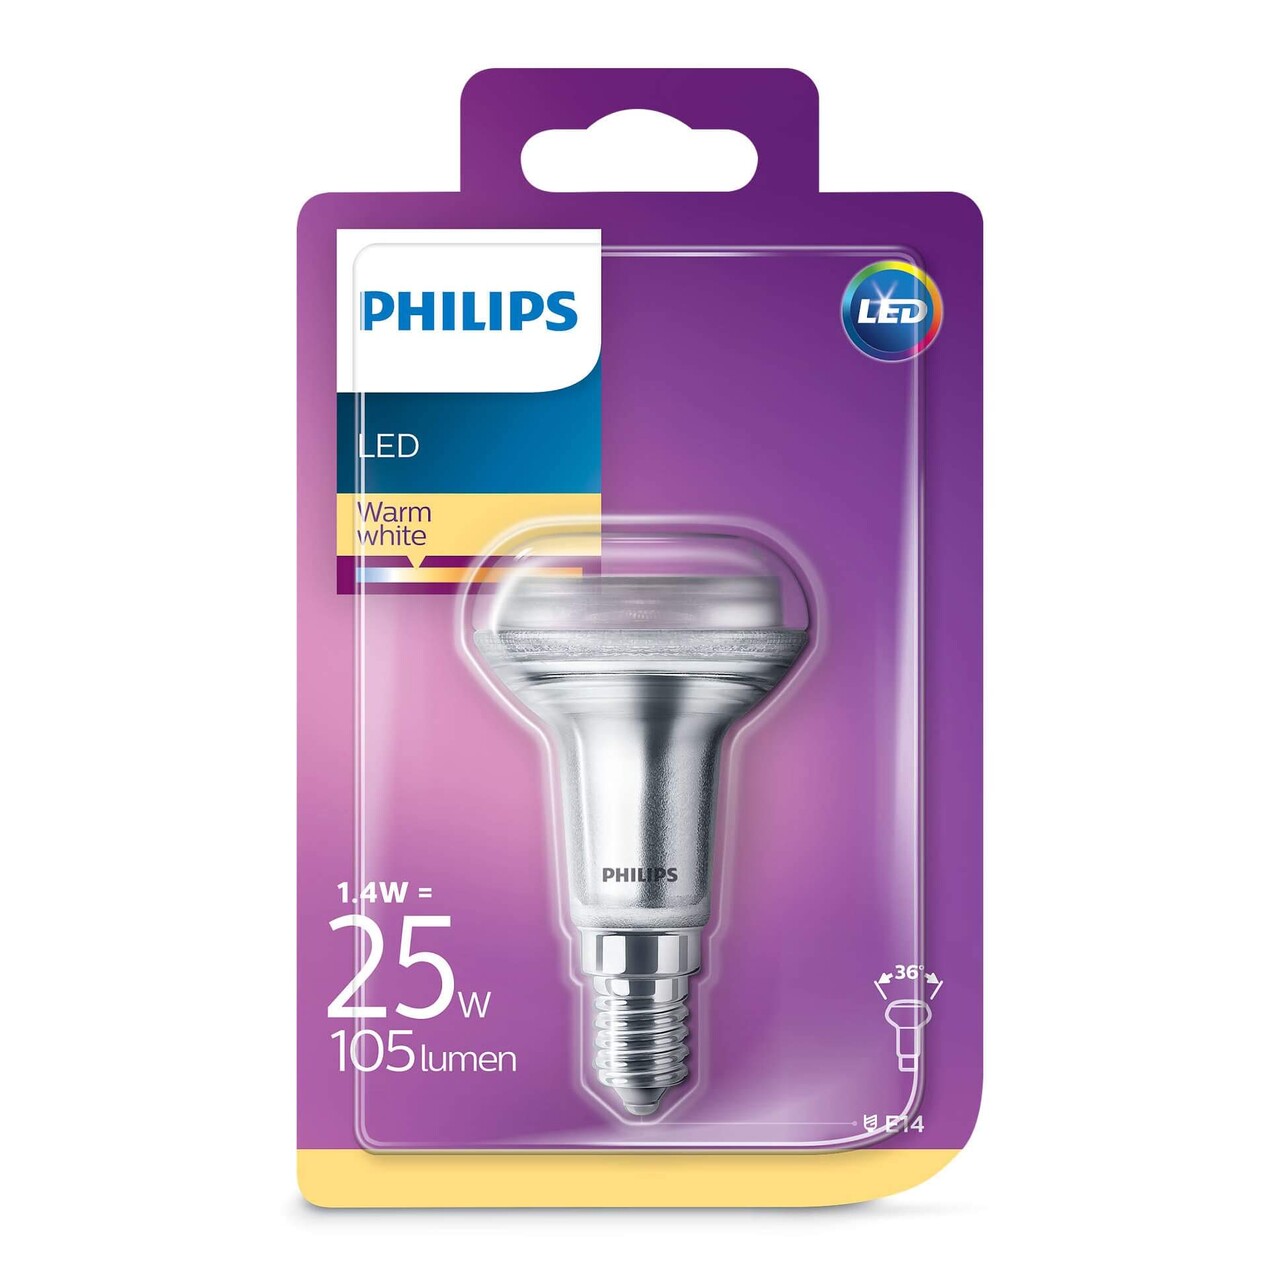 Er is behoefte aan uitbreiden Stout Bulb LED 1,4W (105lm) R50 Reflector E14 - Philips - Buy online